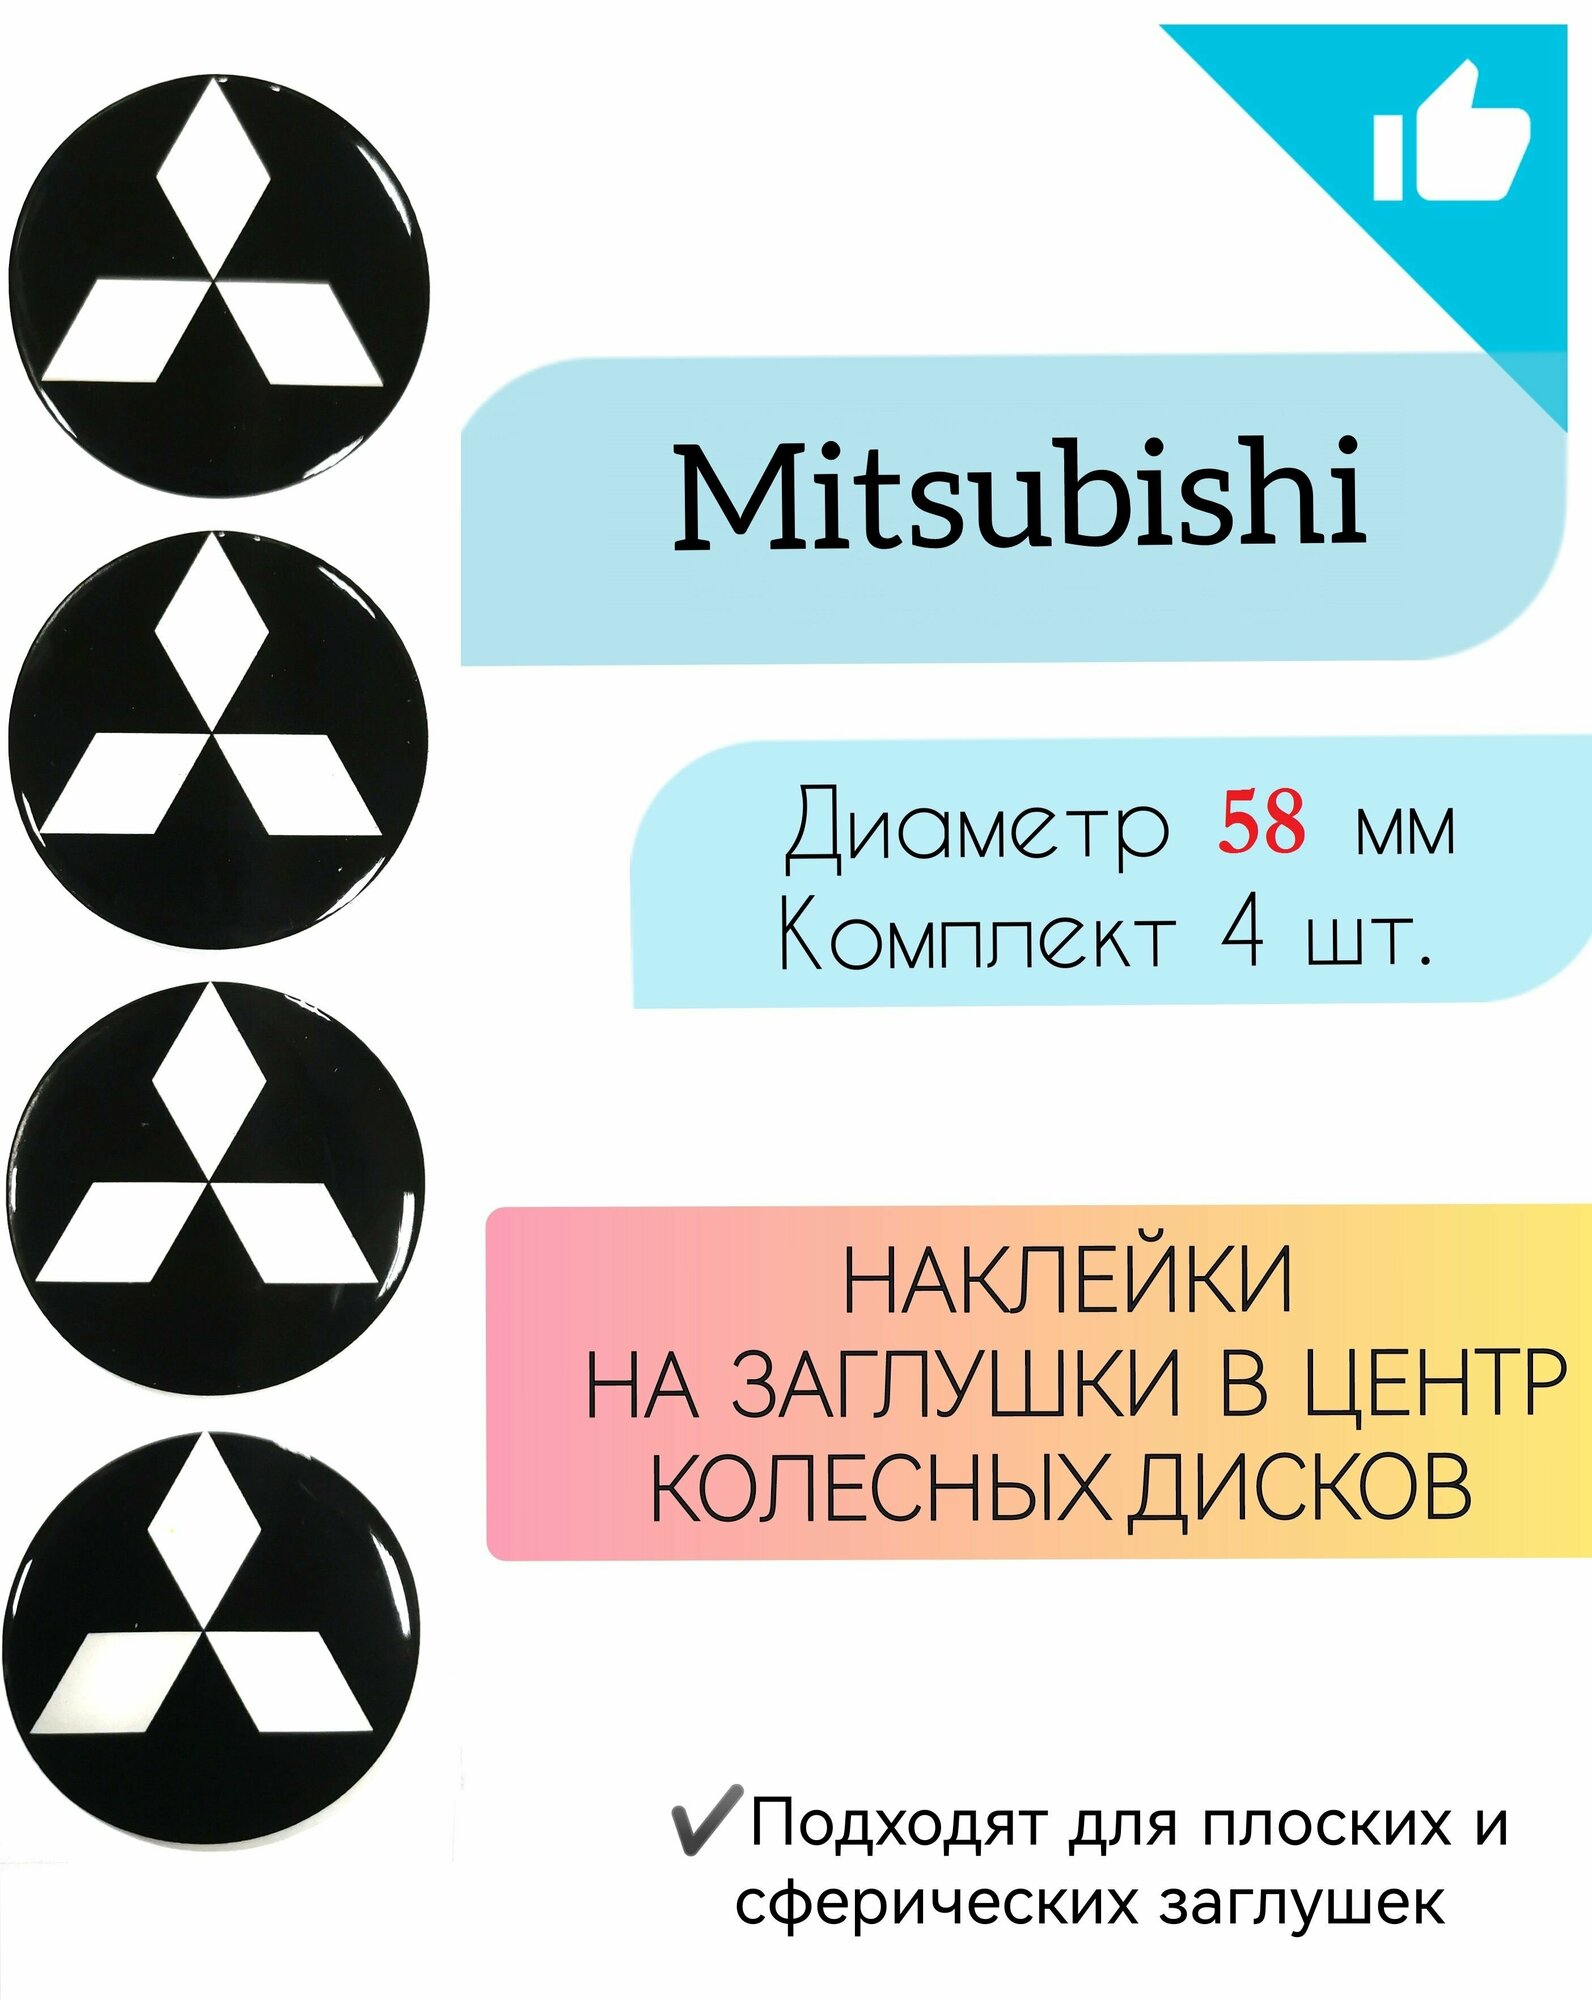 Наклейки на колесные диски / Диаметр 58 мм / Митсубиши / Mitsubishi